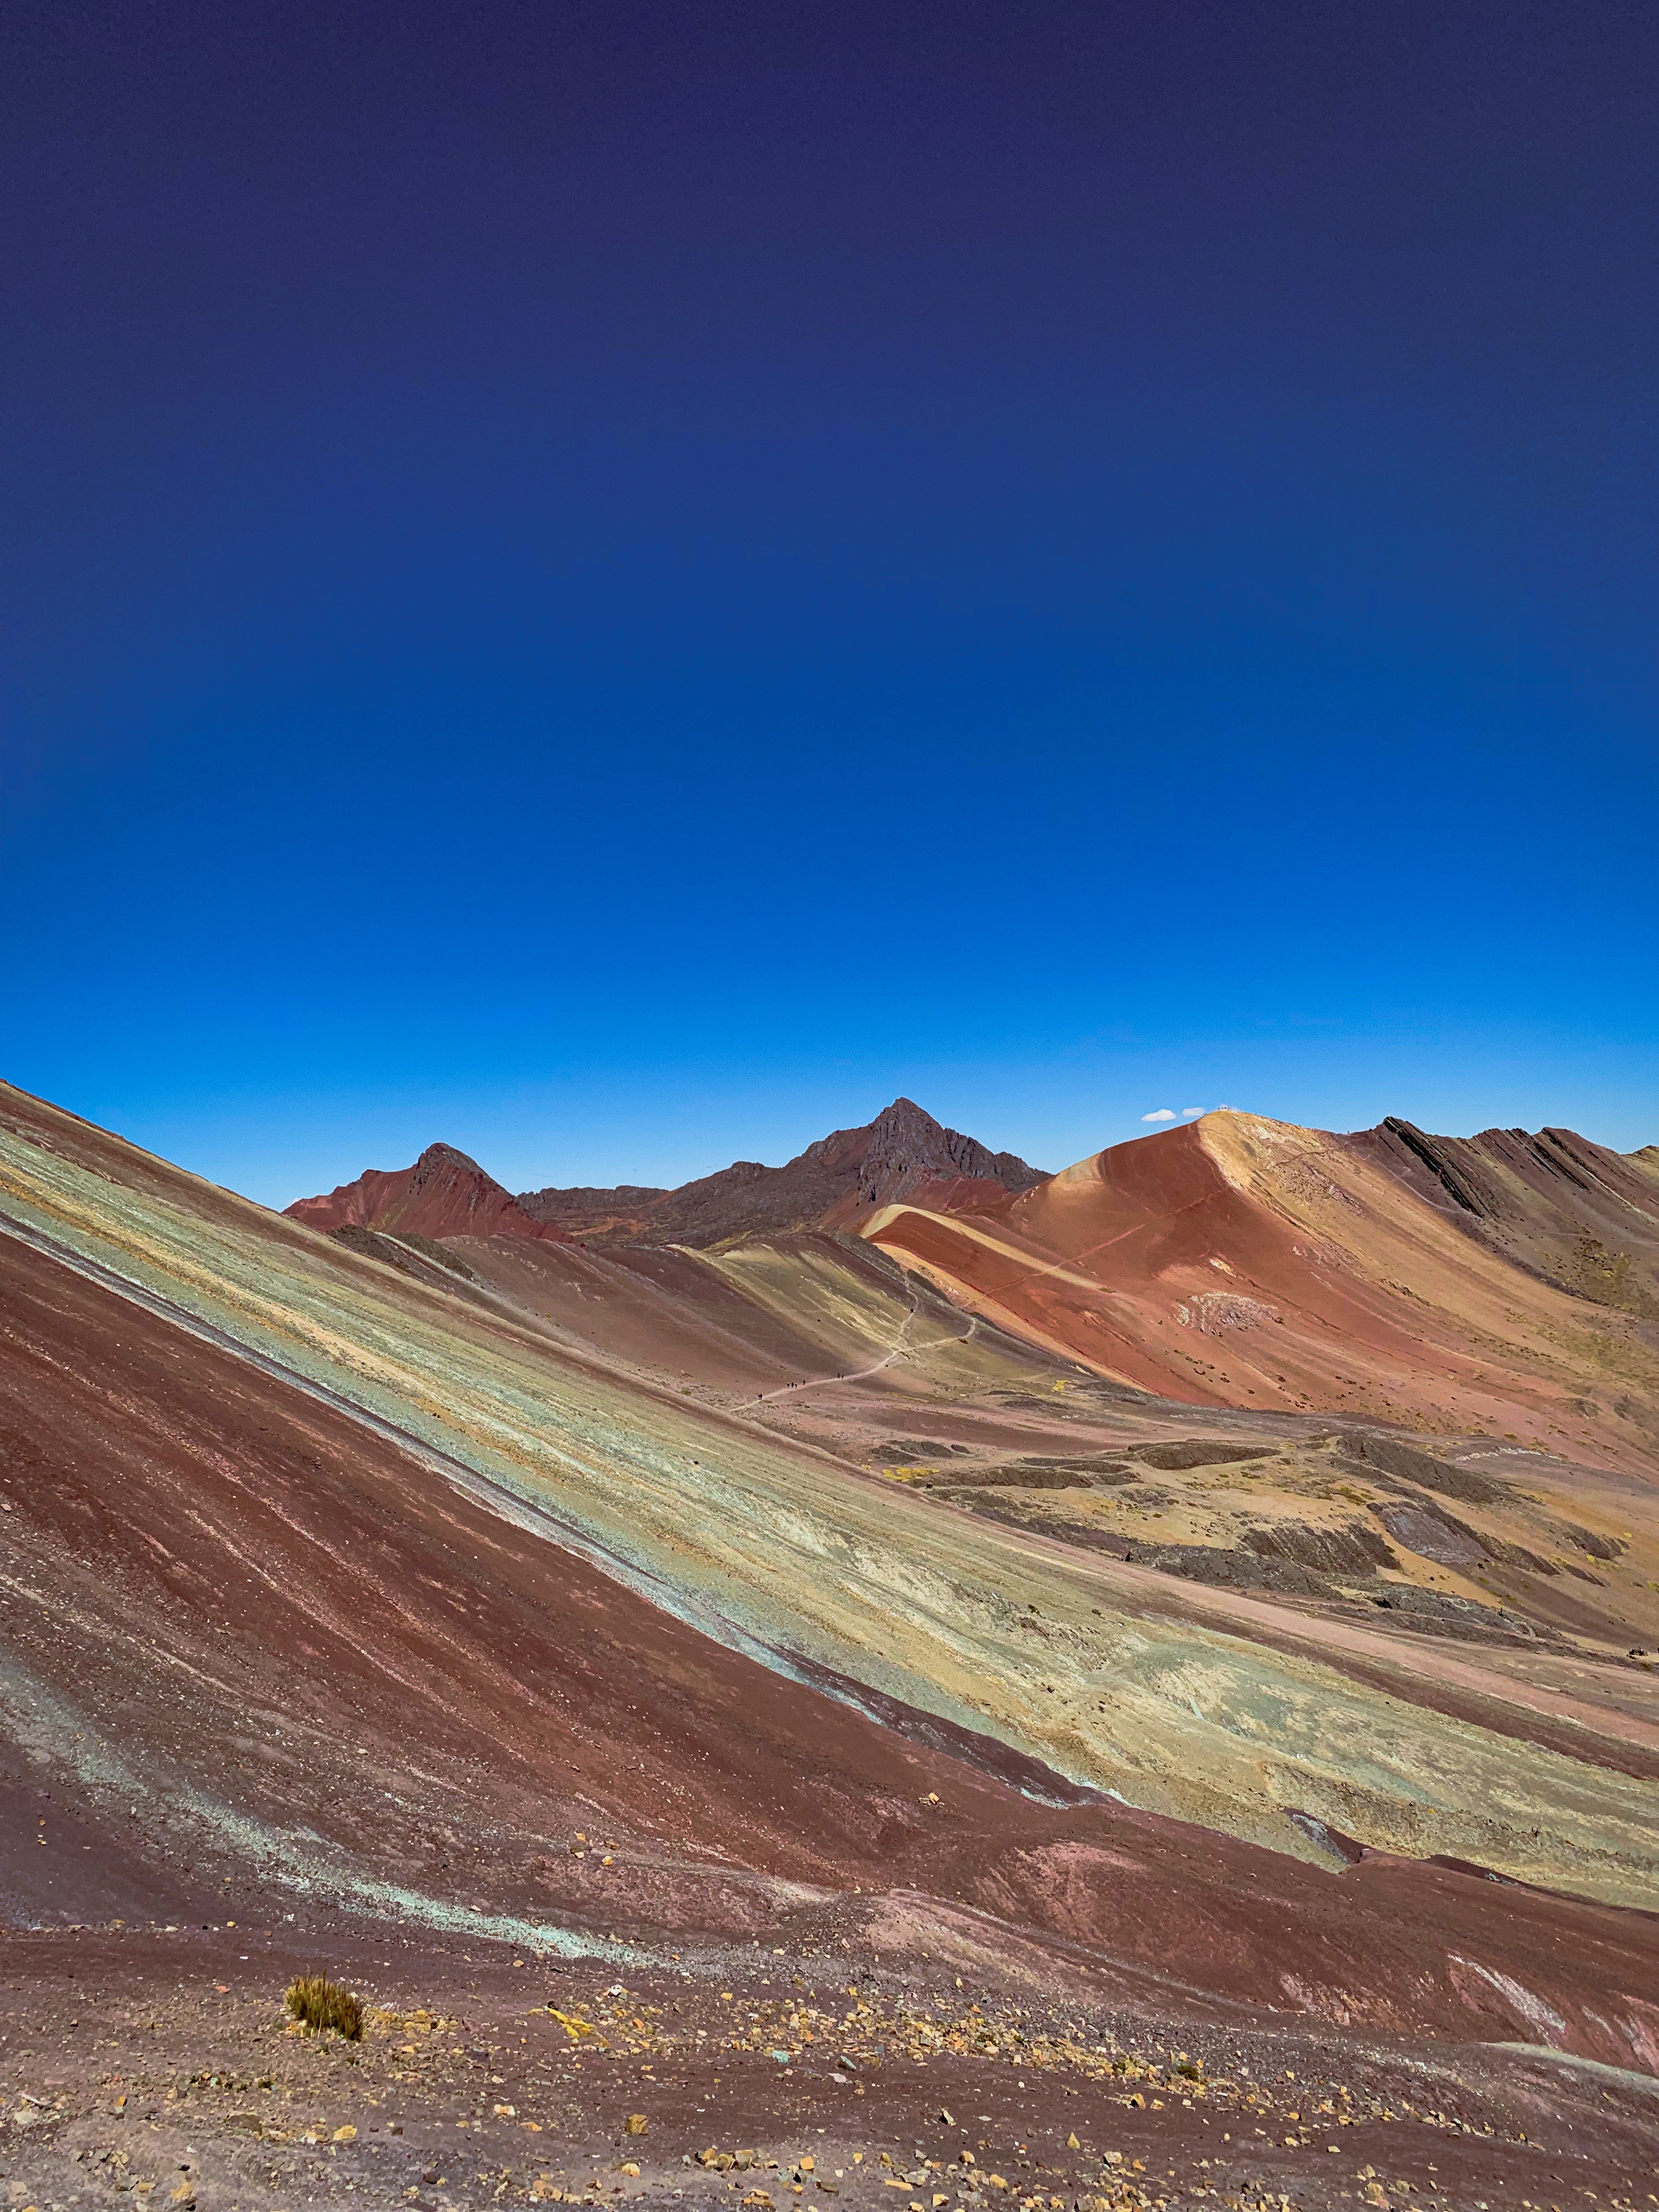 The colored Khizi Mountains